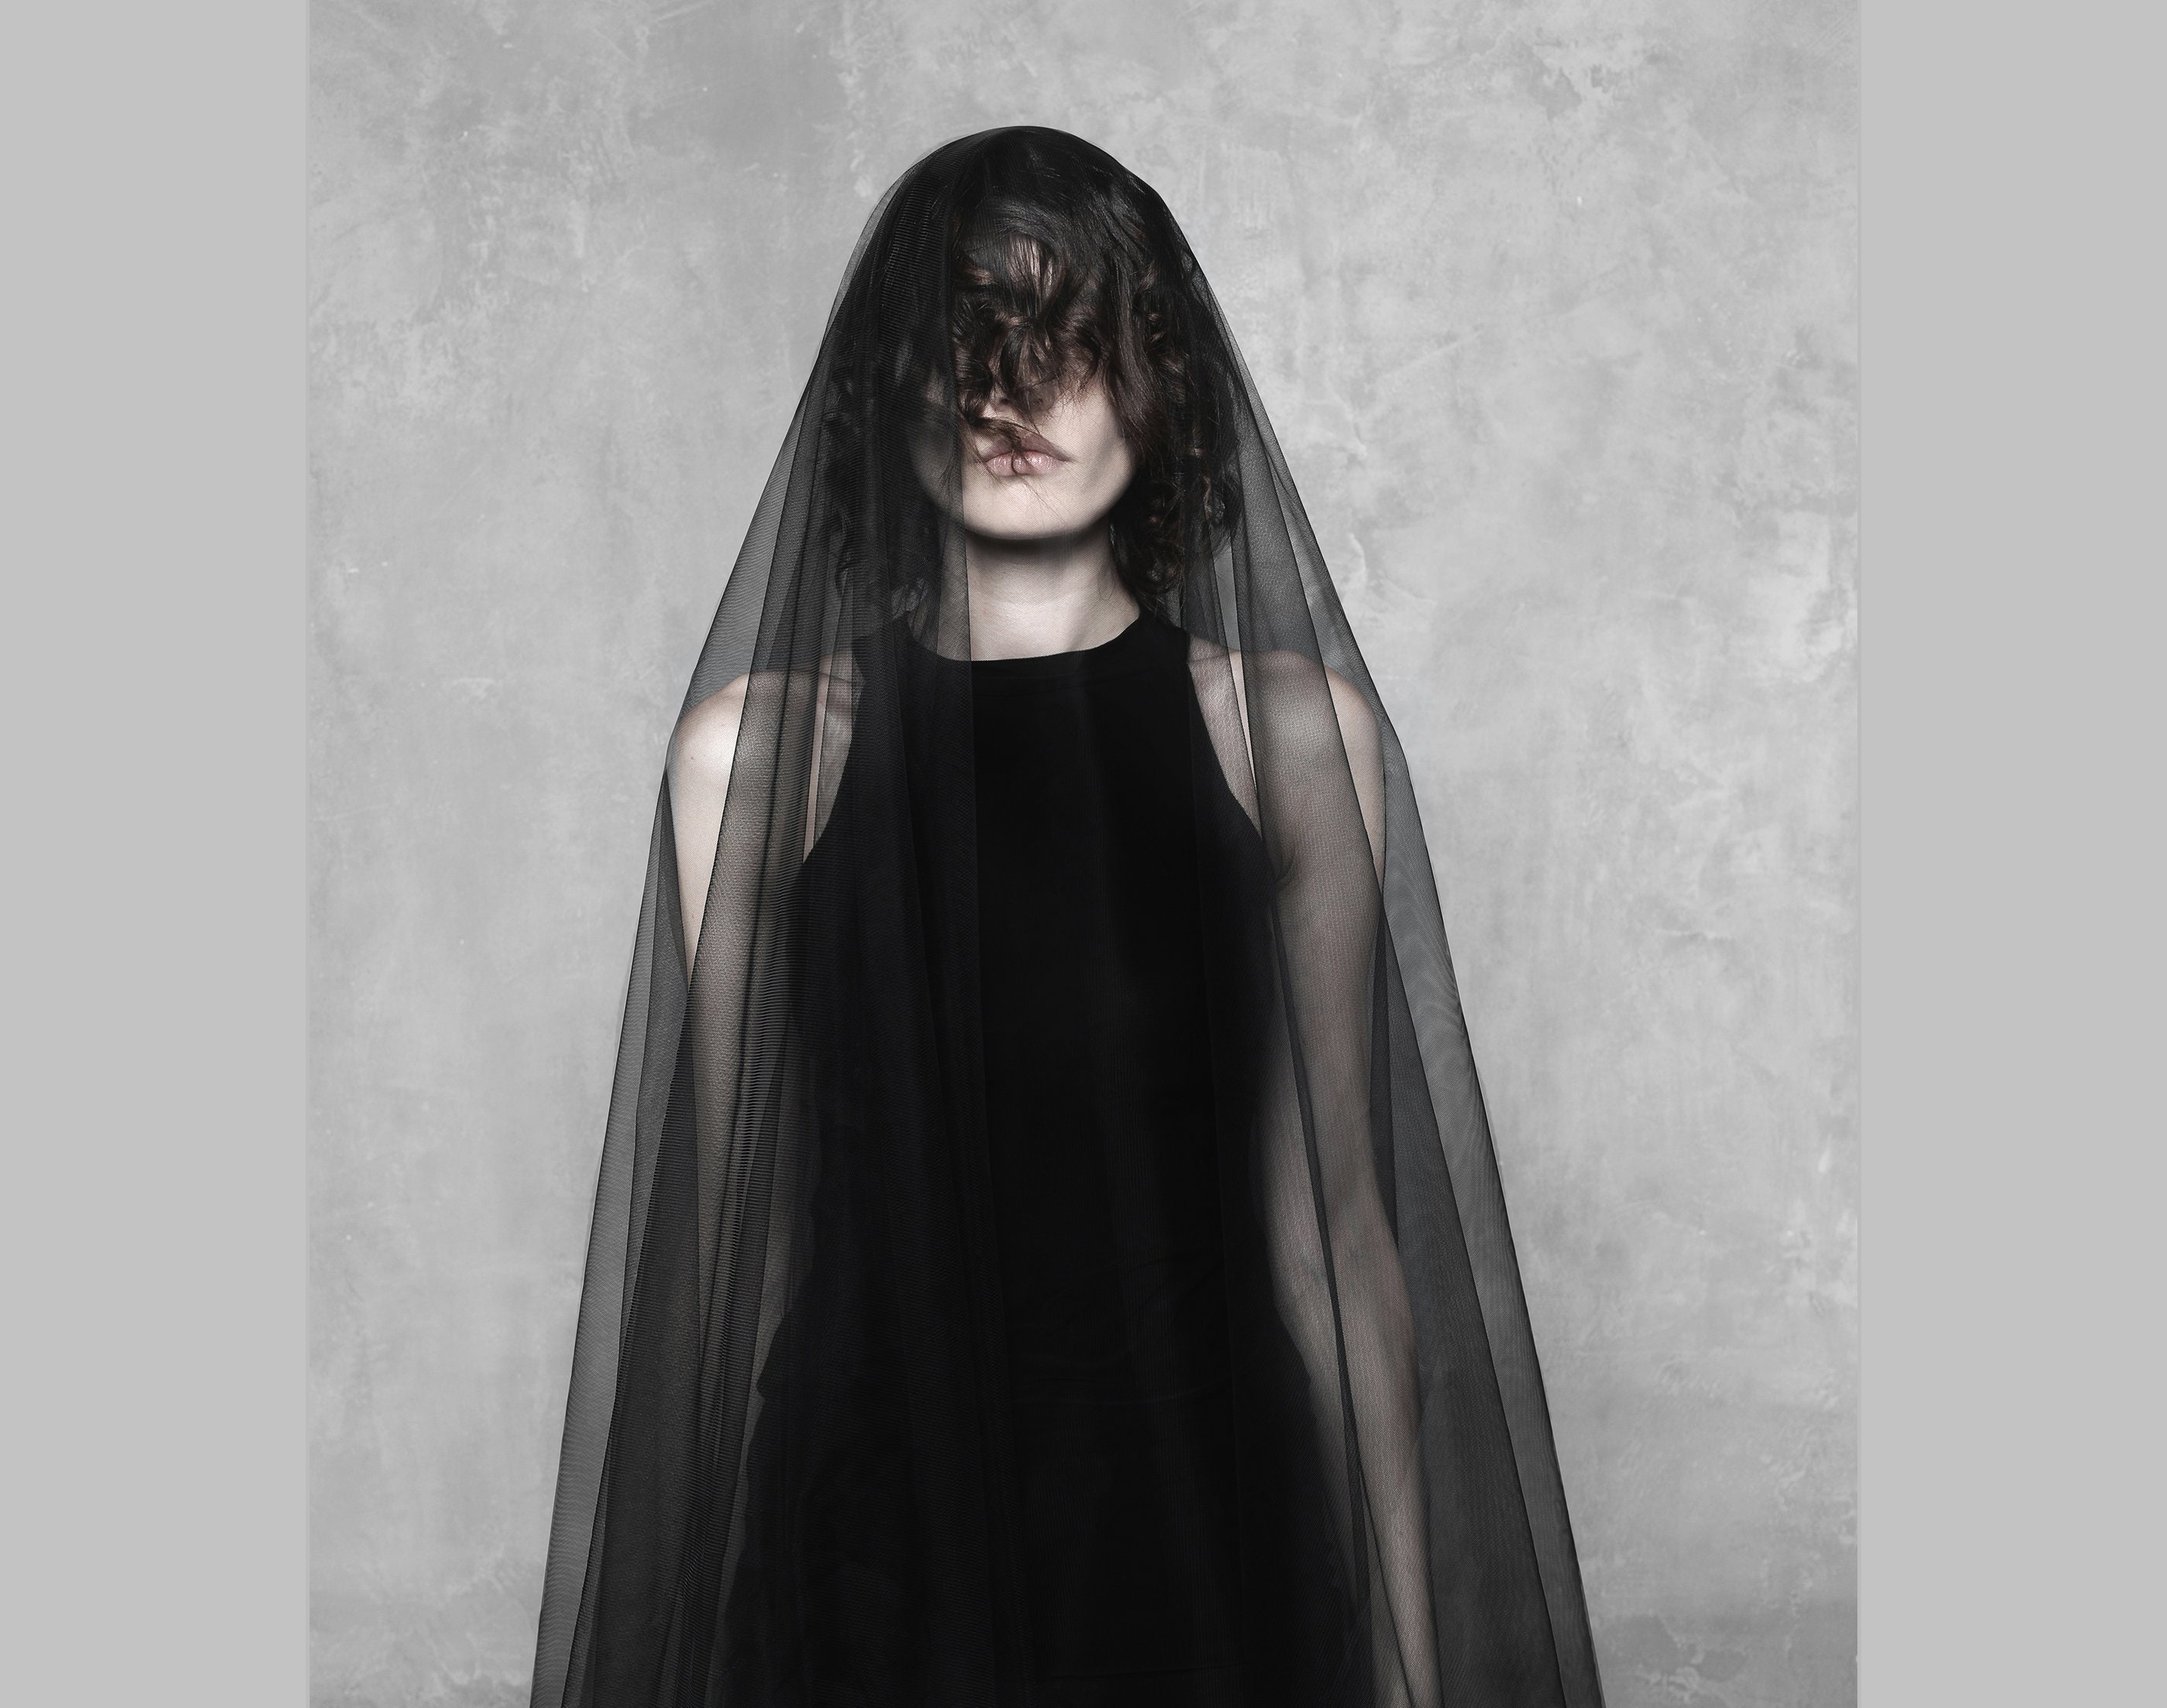 Navy blue wedding tulle veil for photoshoot / Gothic Sheer | Etsy